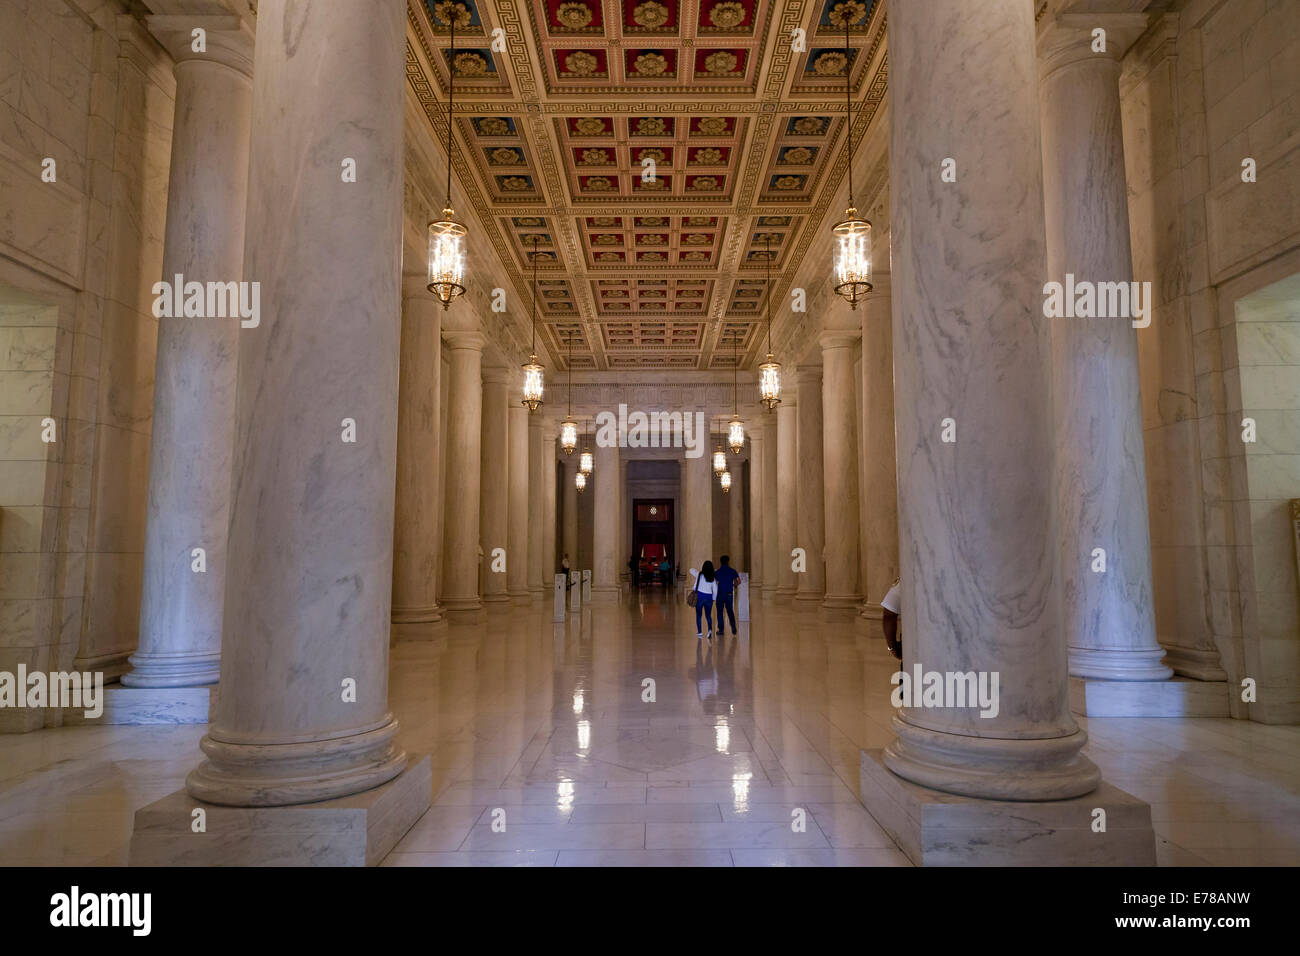 US Supreme Court building interior columns - Washington, DC USA Stock Photo